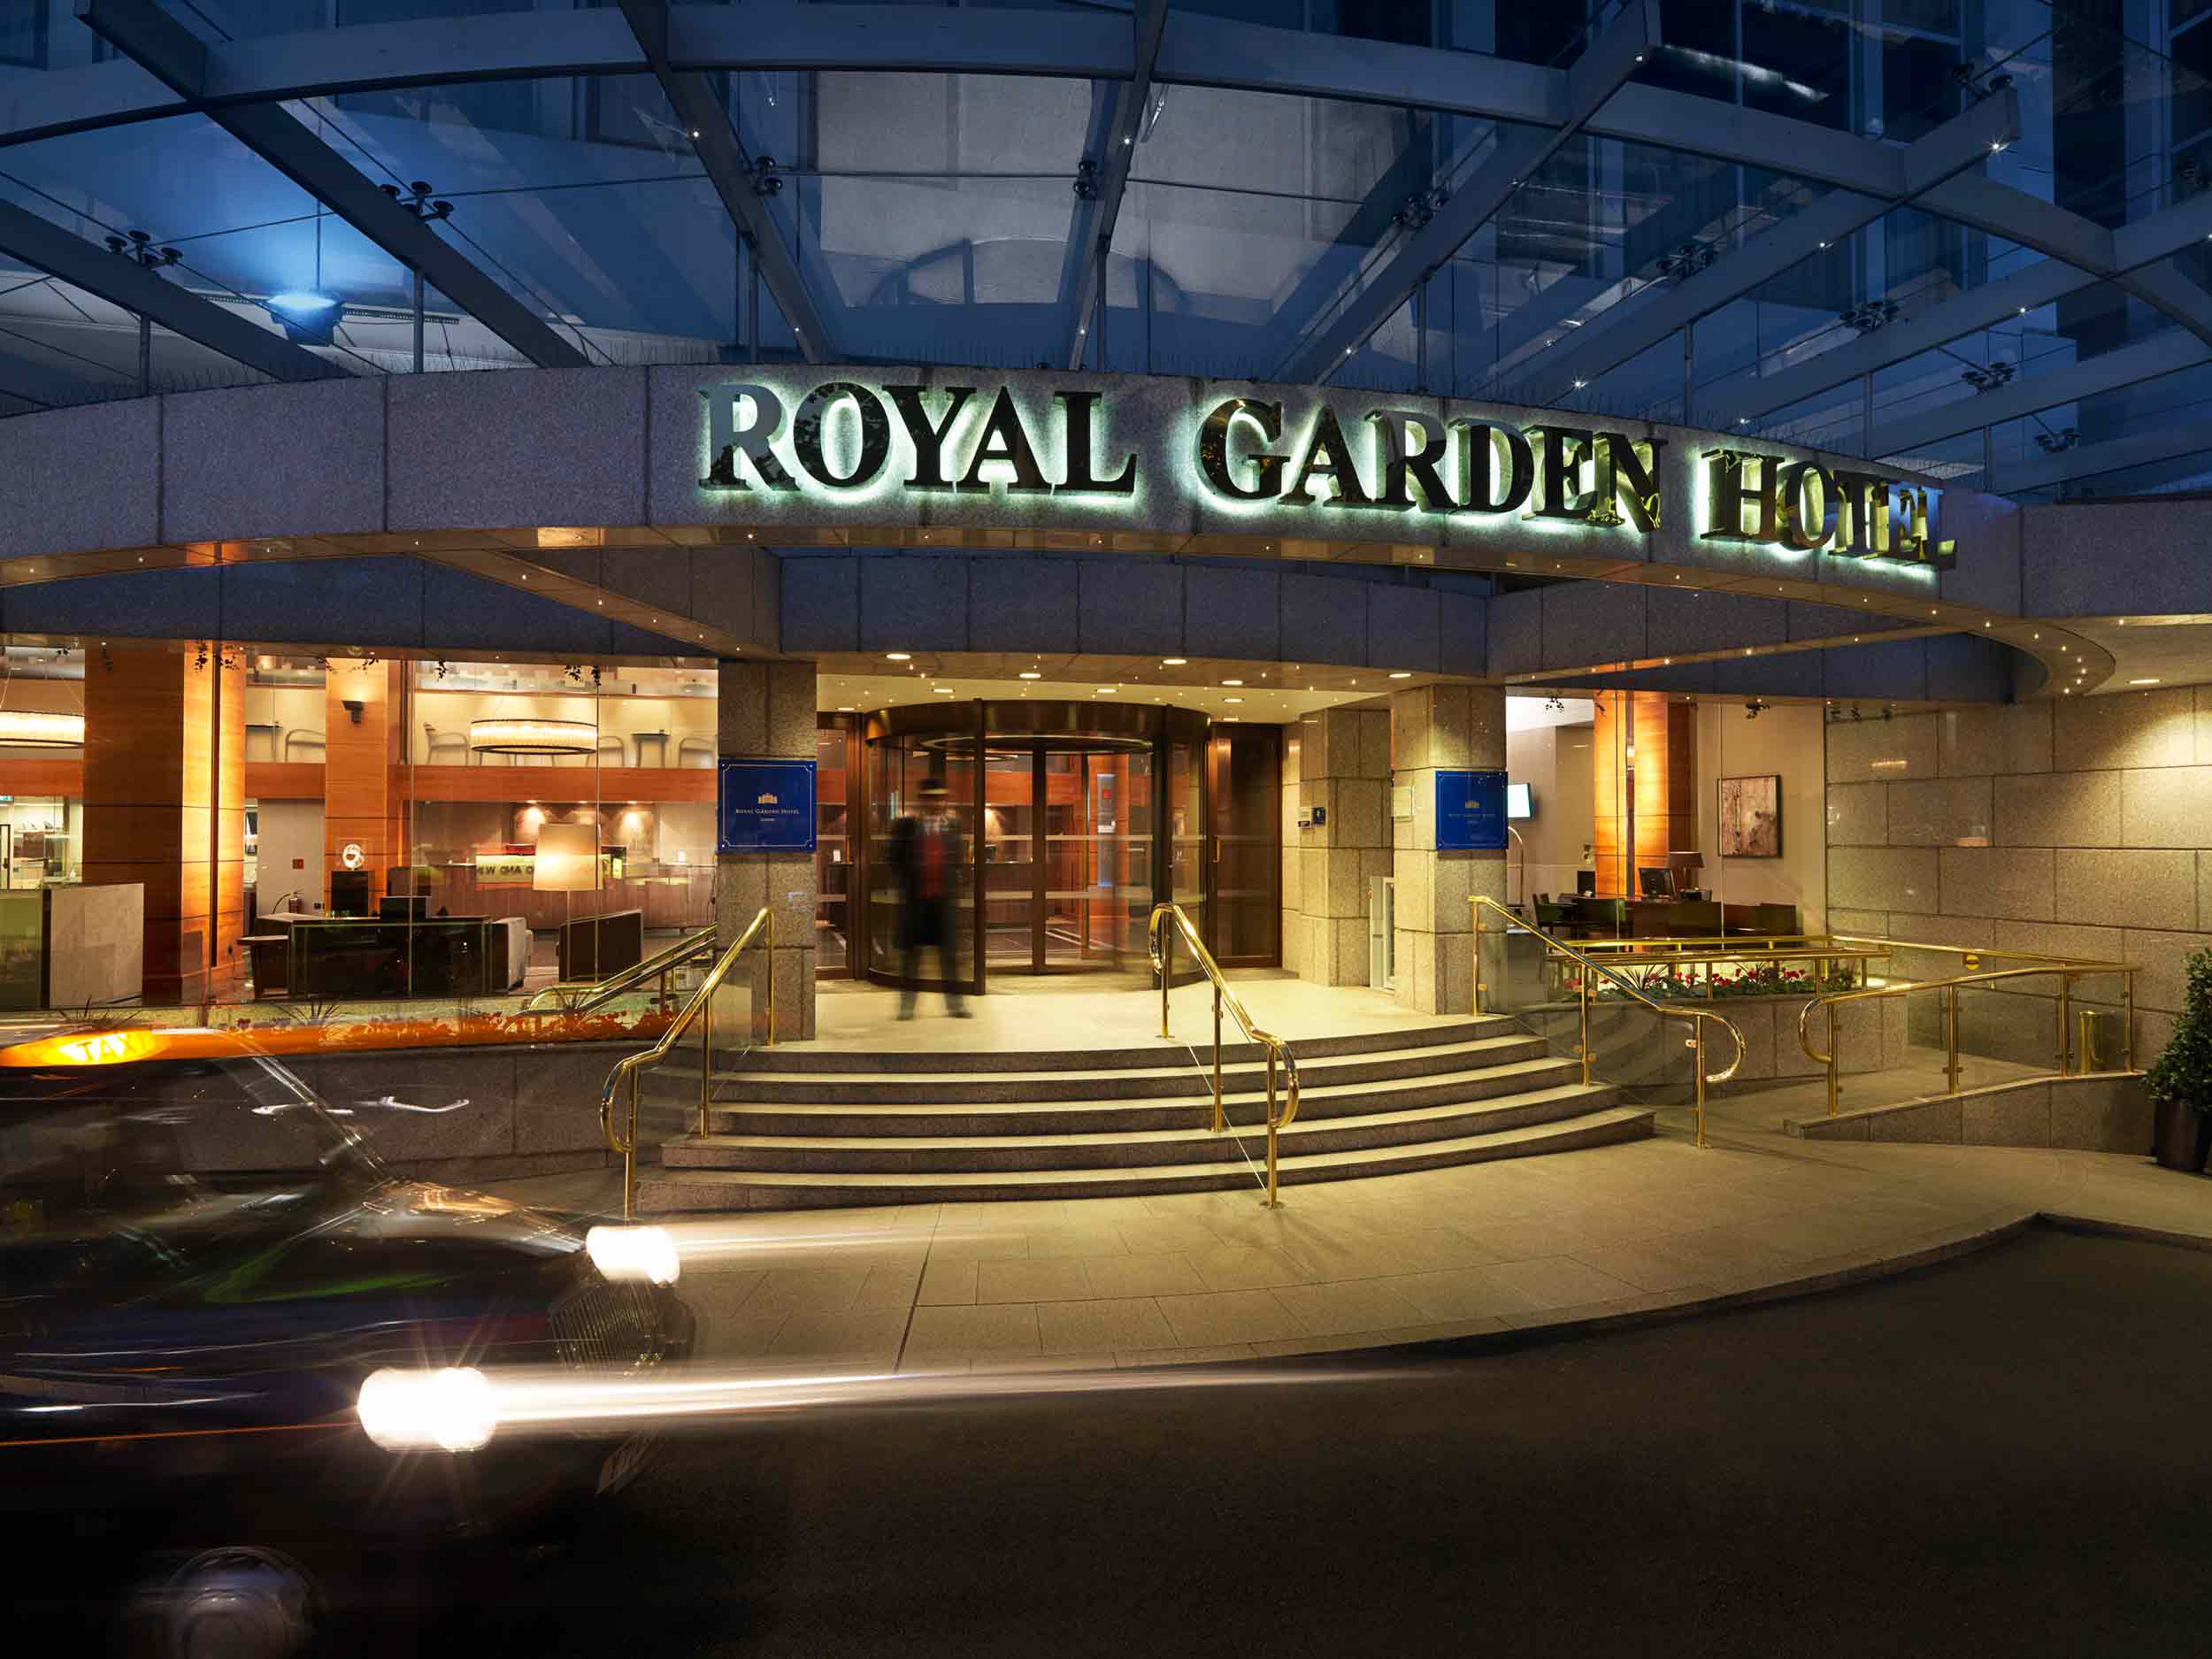 Royal Garden Hotel - Hotels in London | WorldHotels Elite